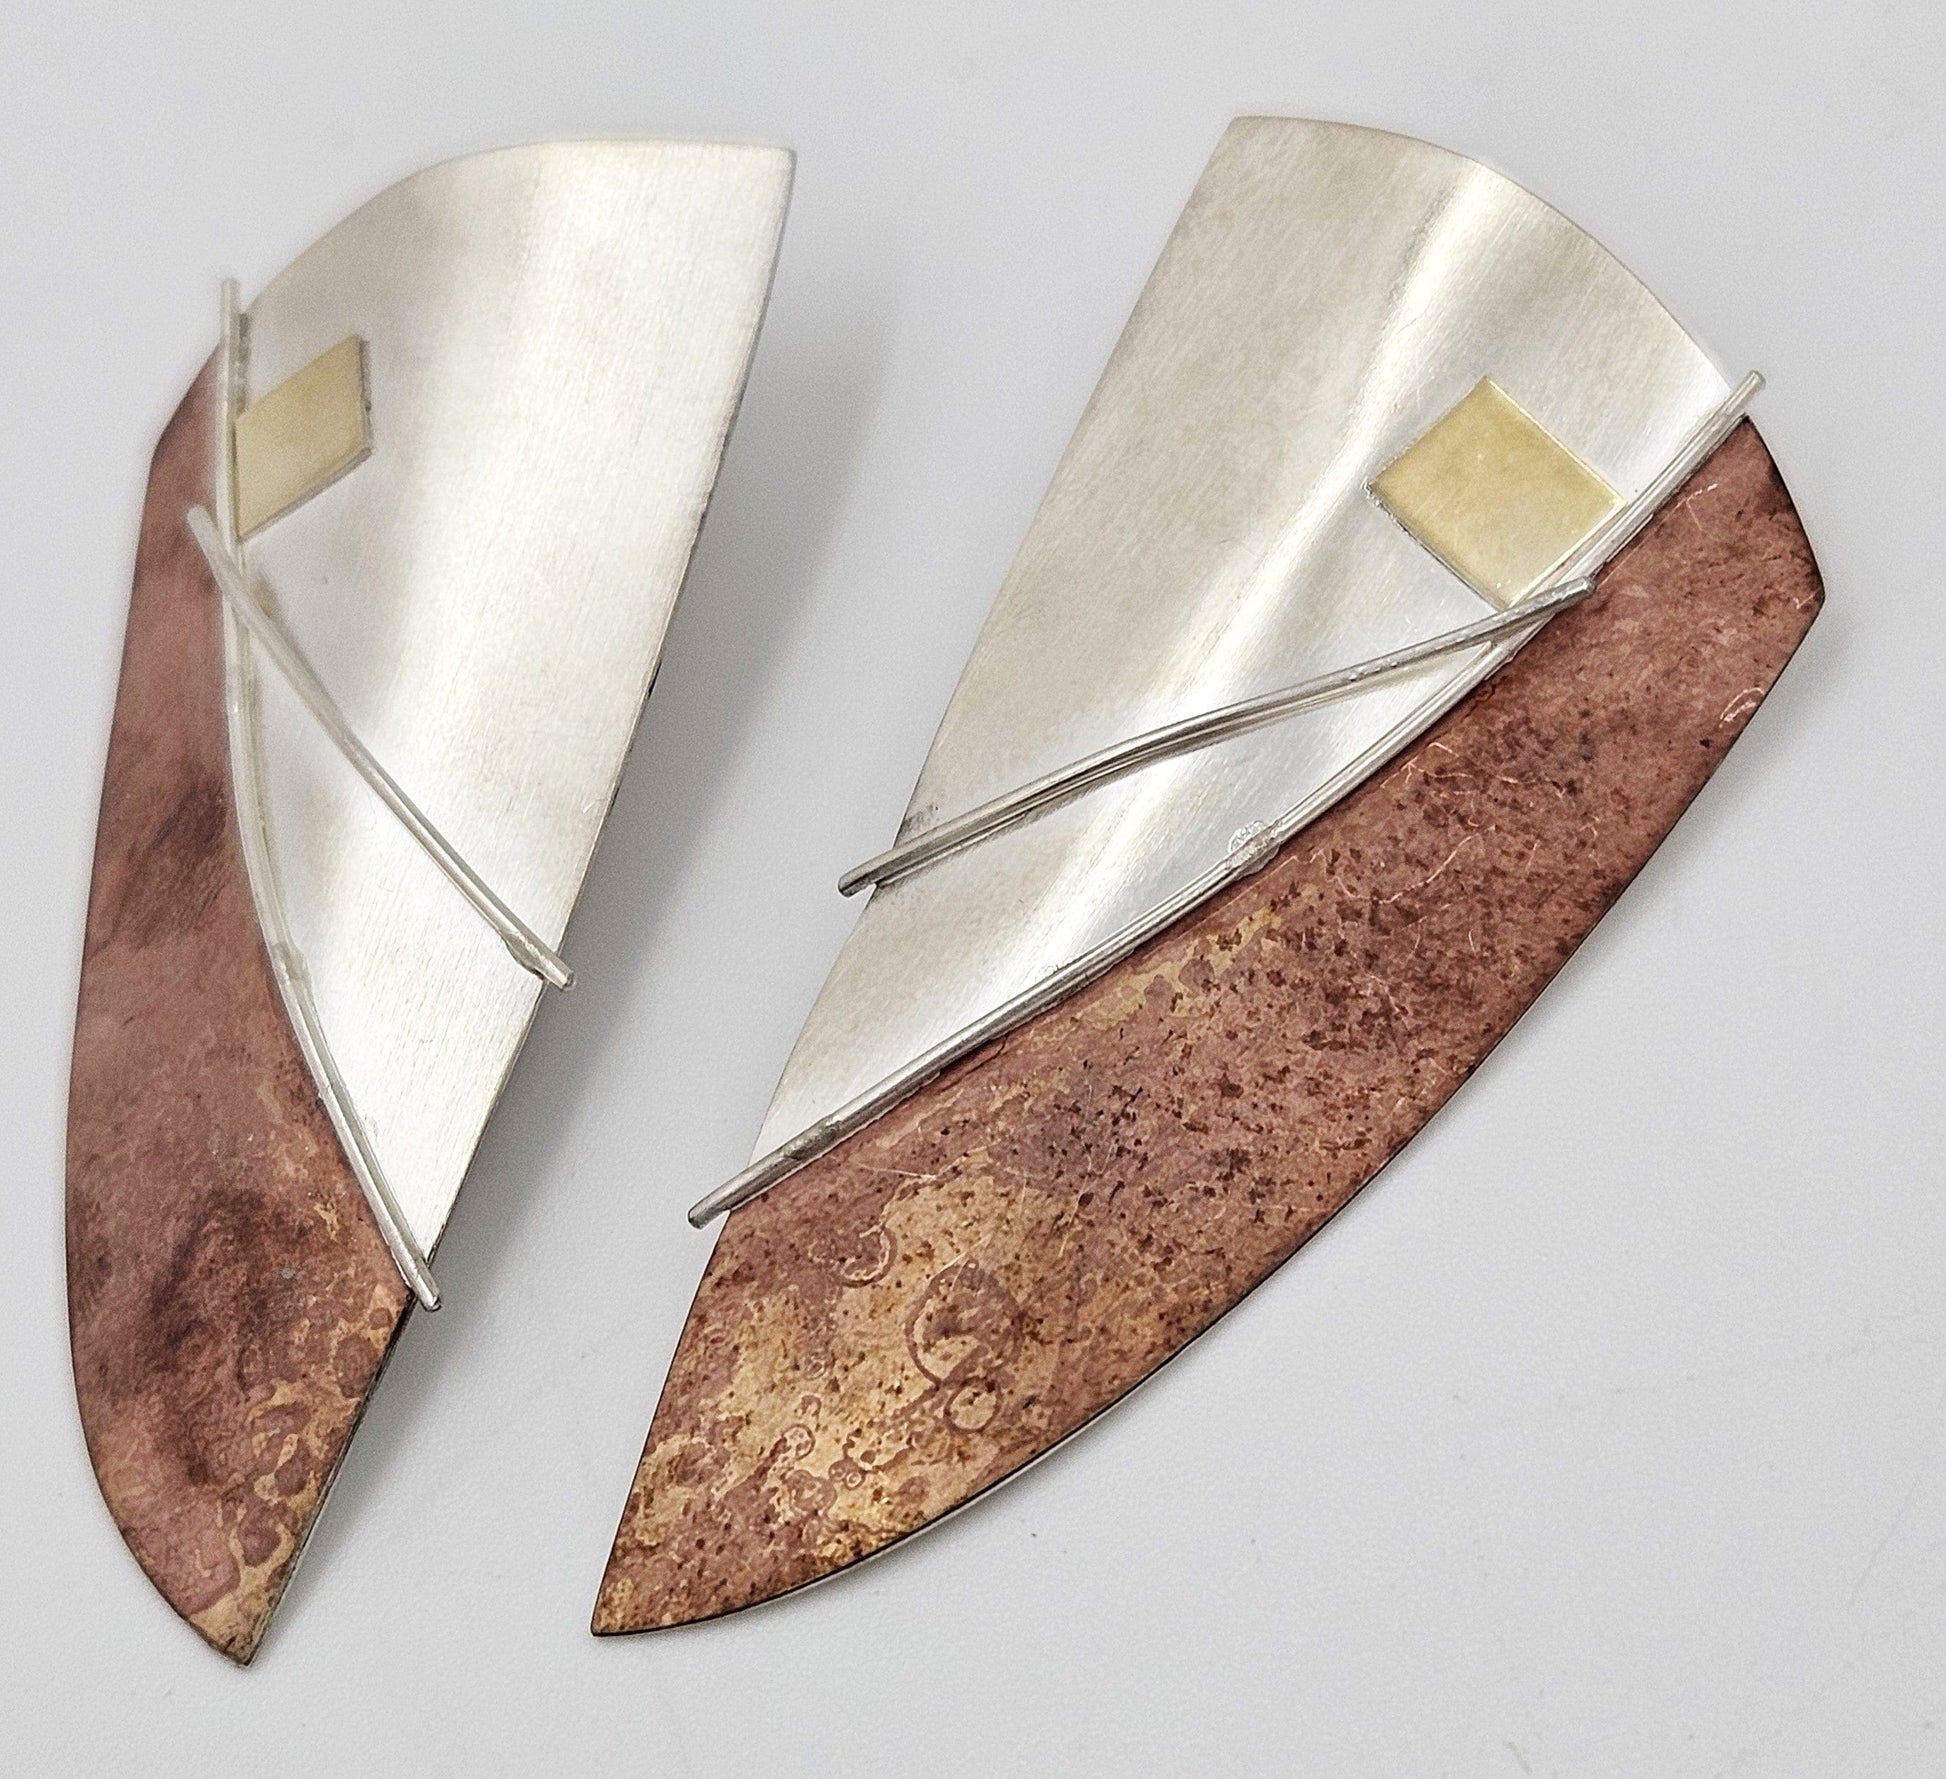 Artisan Sterling Earrings Jewelry Vintage Artisan Handwrought Sterling & Mixed Metal Abstract Mod XL Earrings